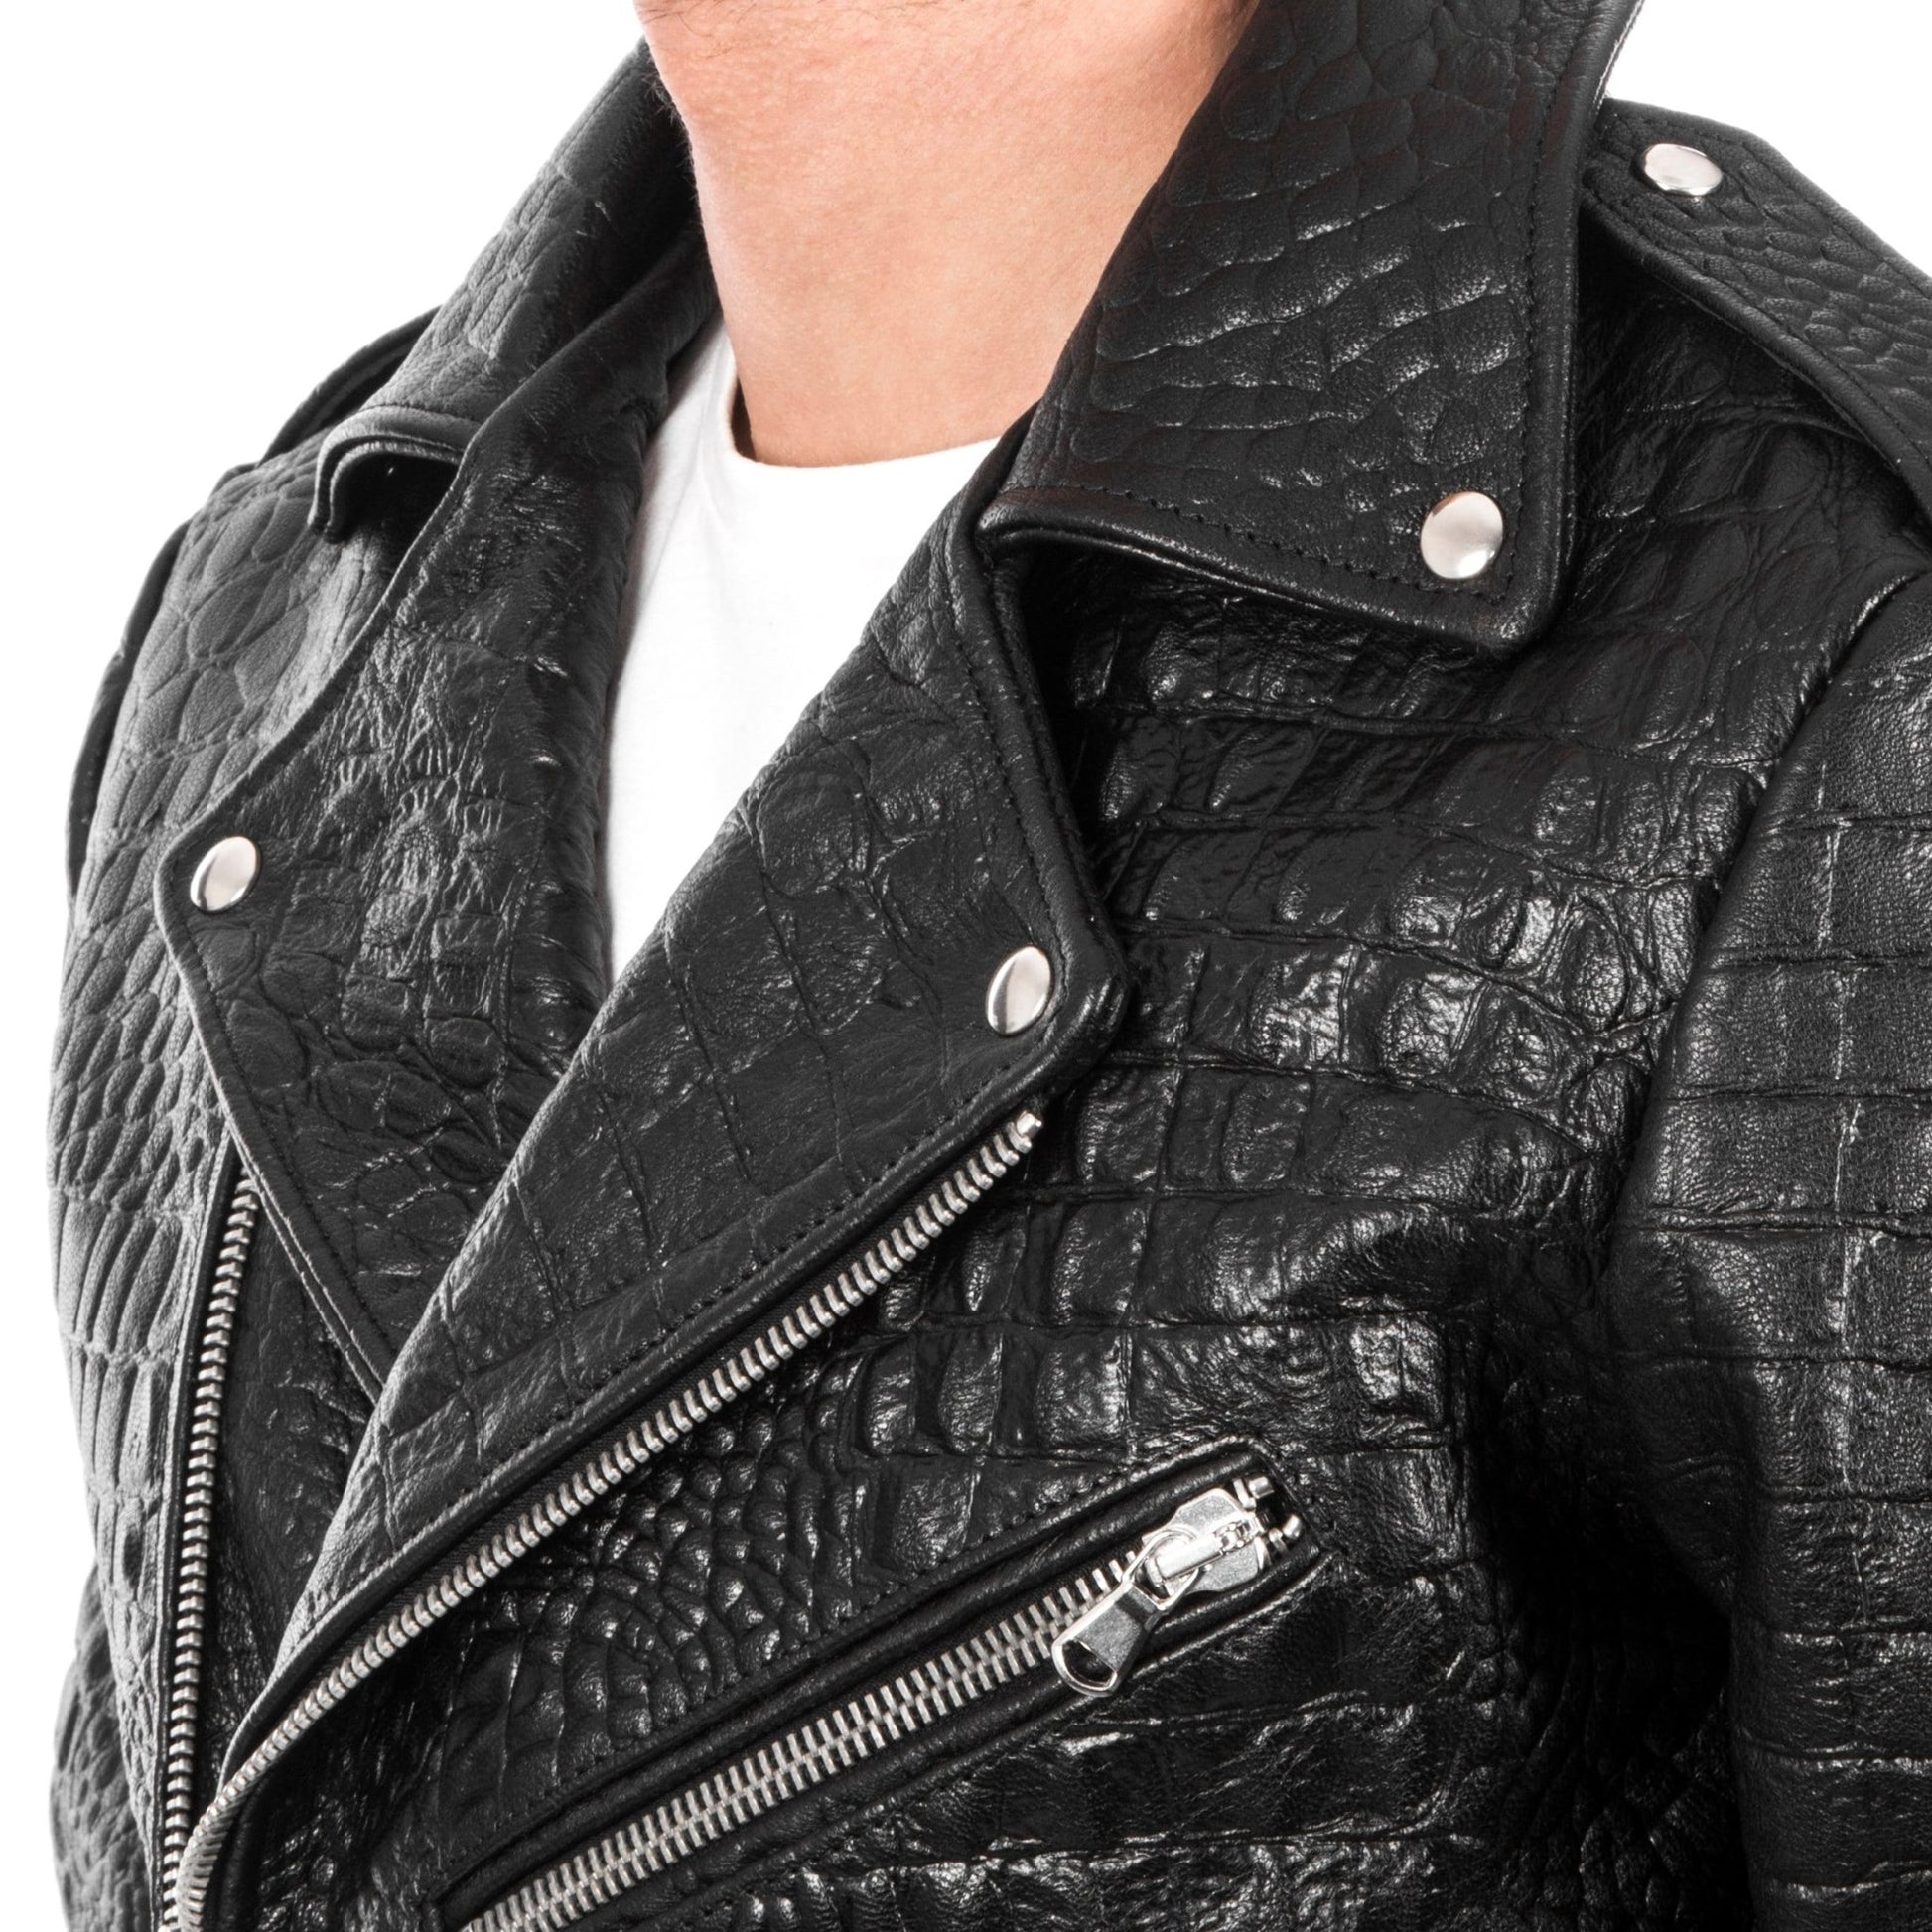 Saint Laurent Crocodile Embossed Jacket in Black for Men